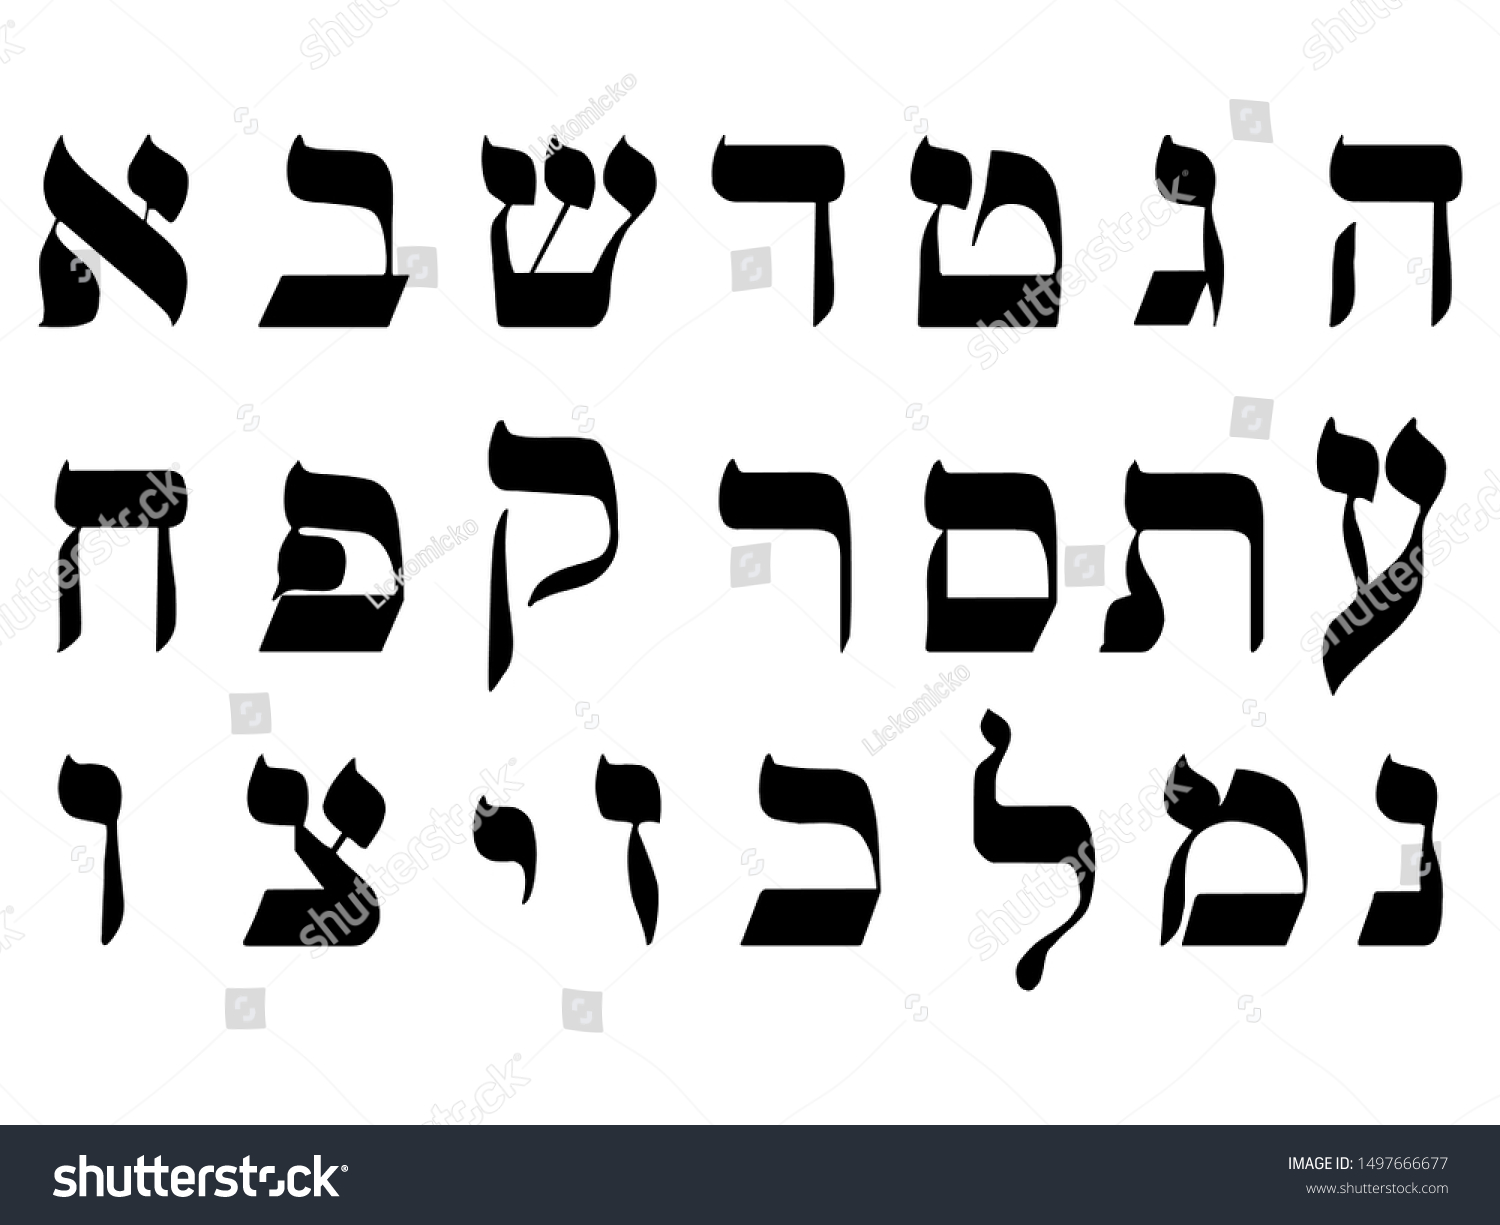 SVG of Black and White Set of Hebrew Alphabet Letters svg